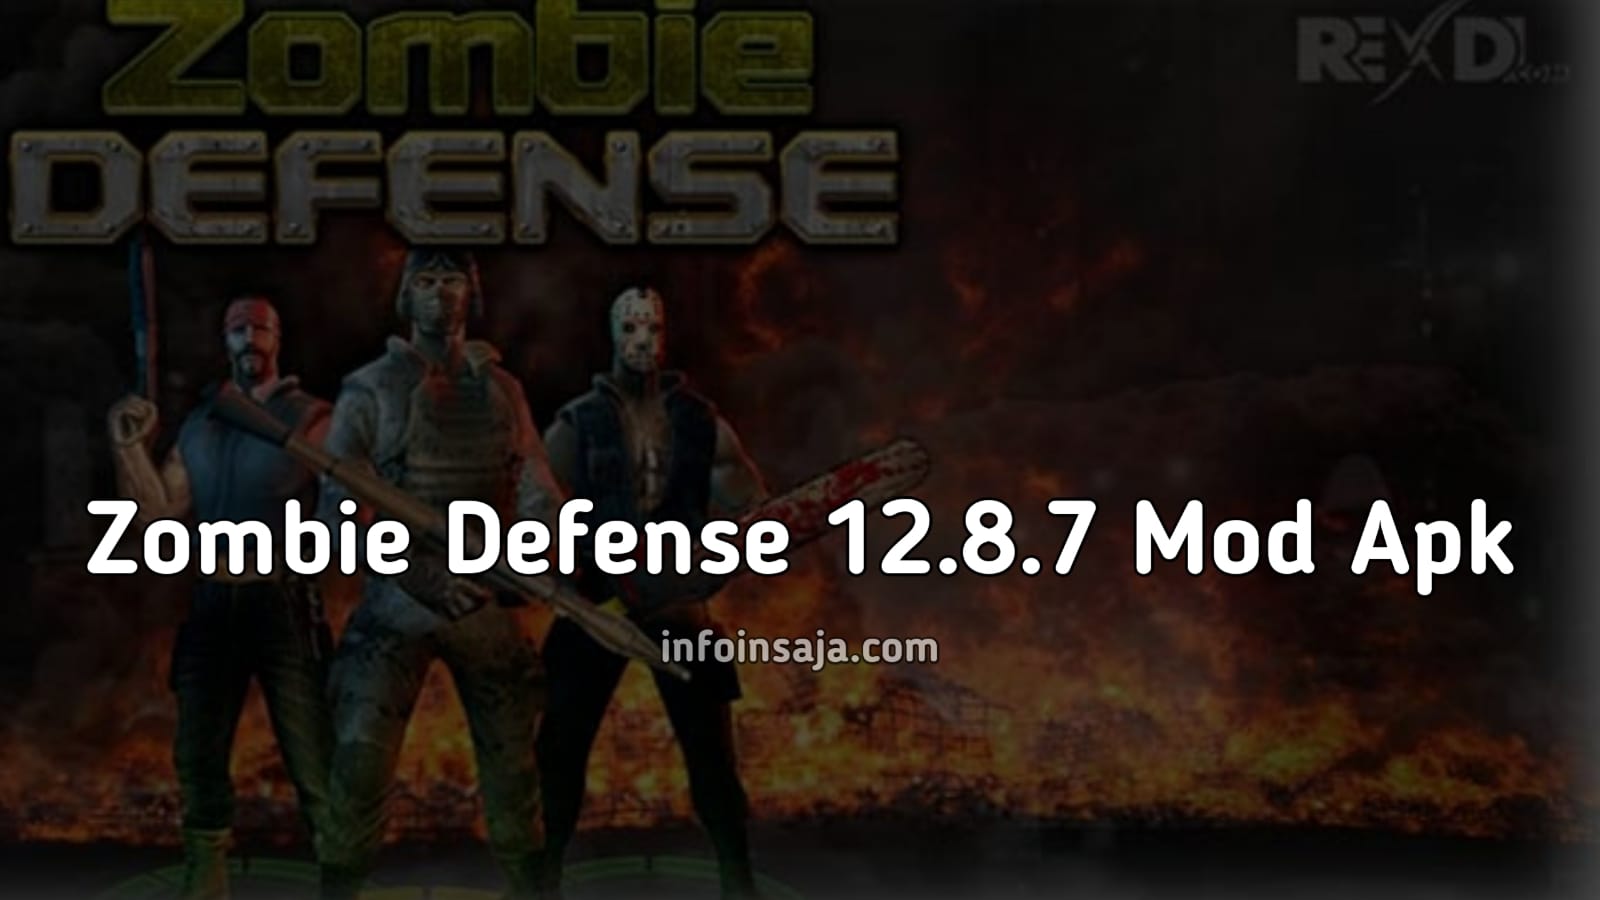 Zombie Defense 12.8.7 Mod Apk